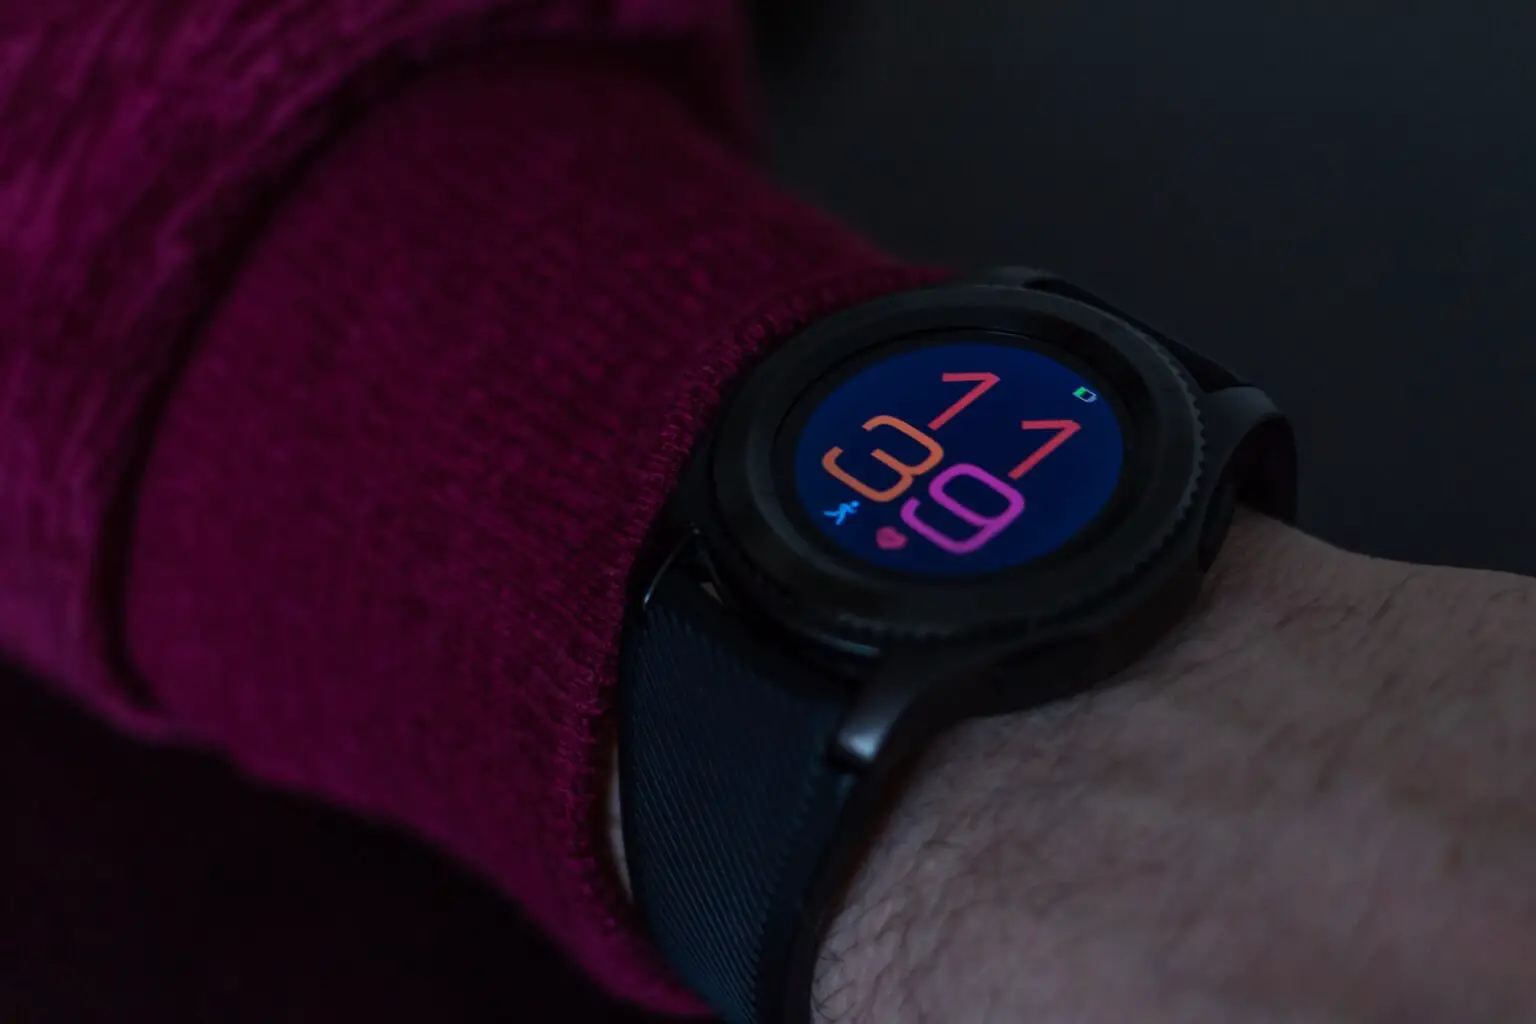 black smartwatch showing 11 39